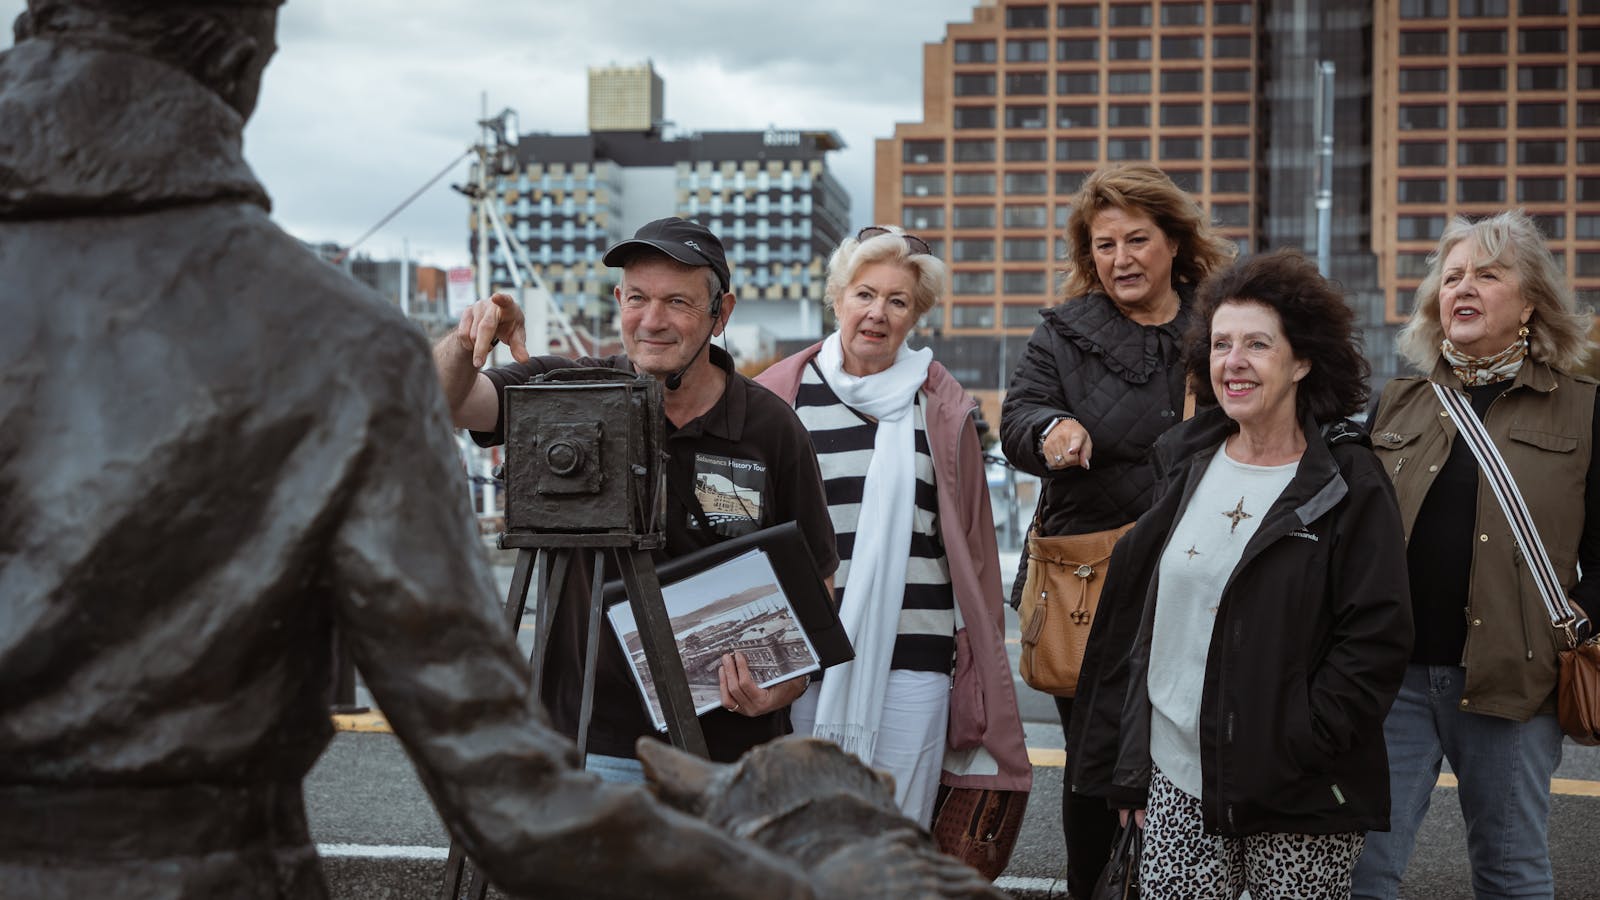 Guests enjoying an art and history walk around Hobart